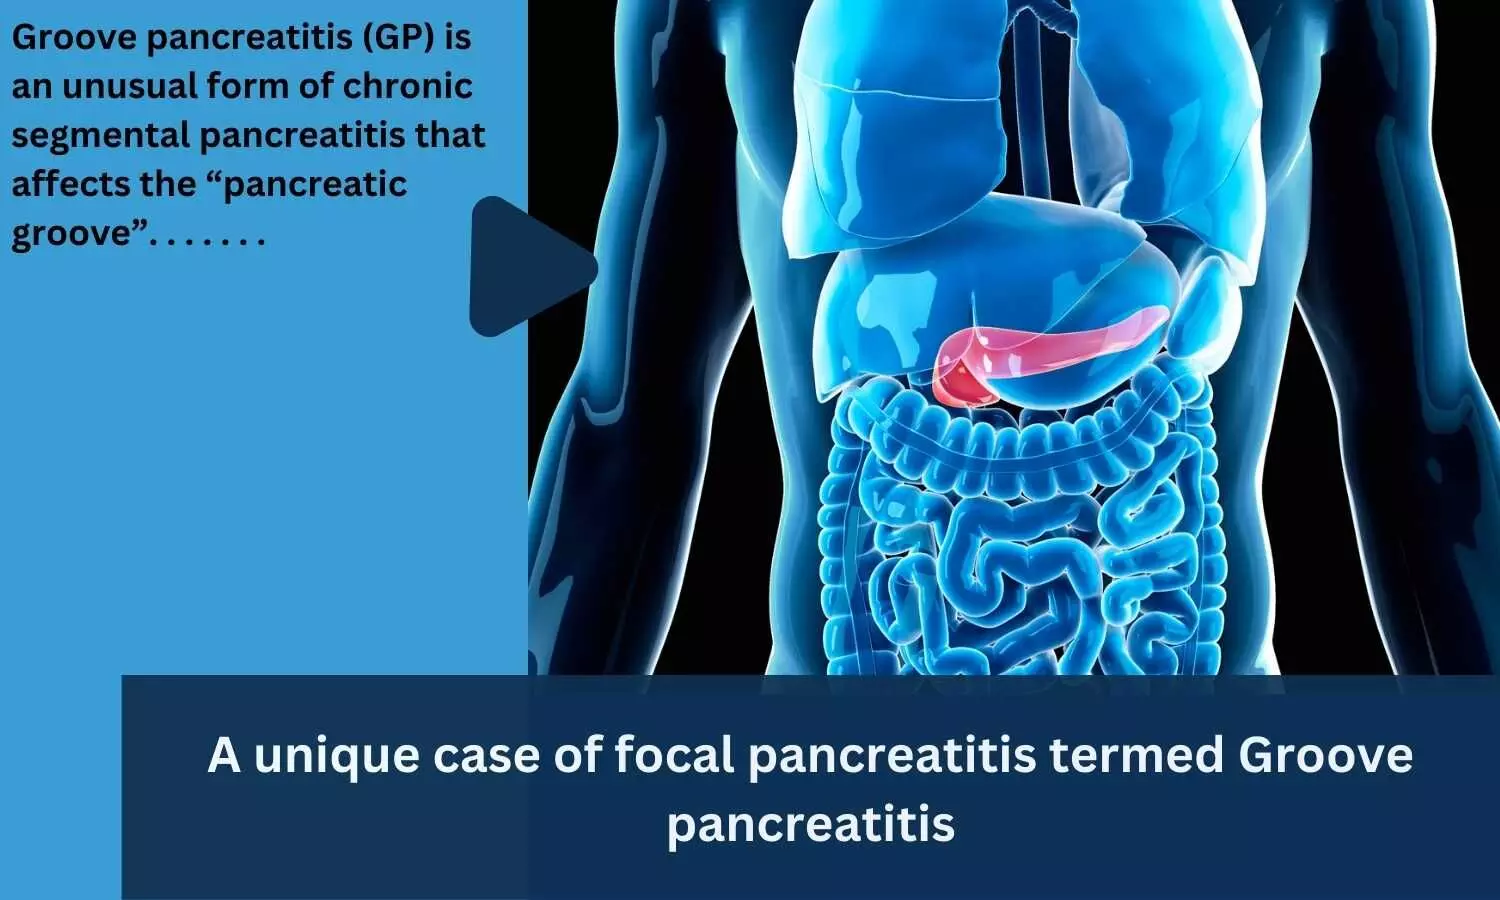 A unique case of focal pancreatitis termed Groove pancreatitis